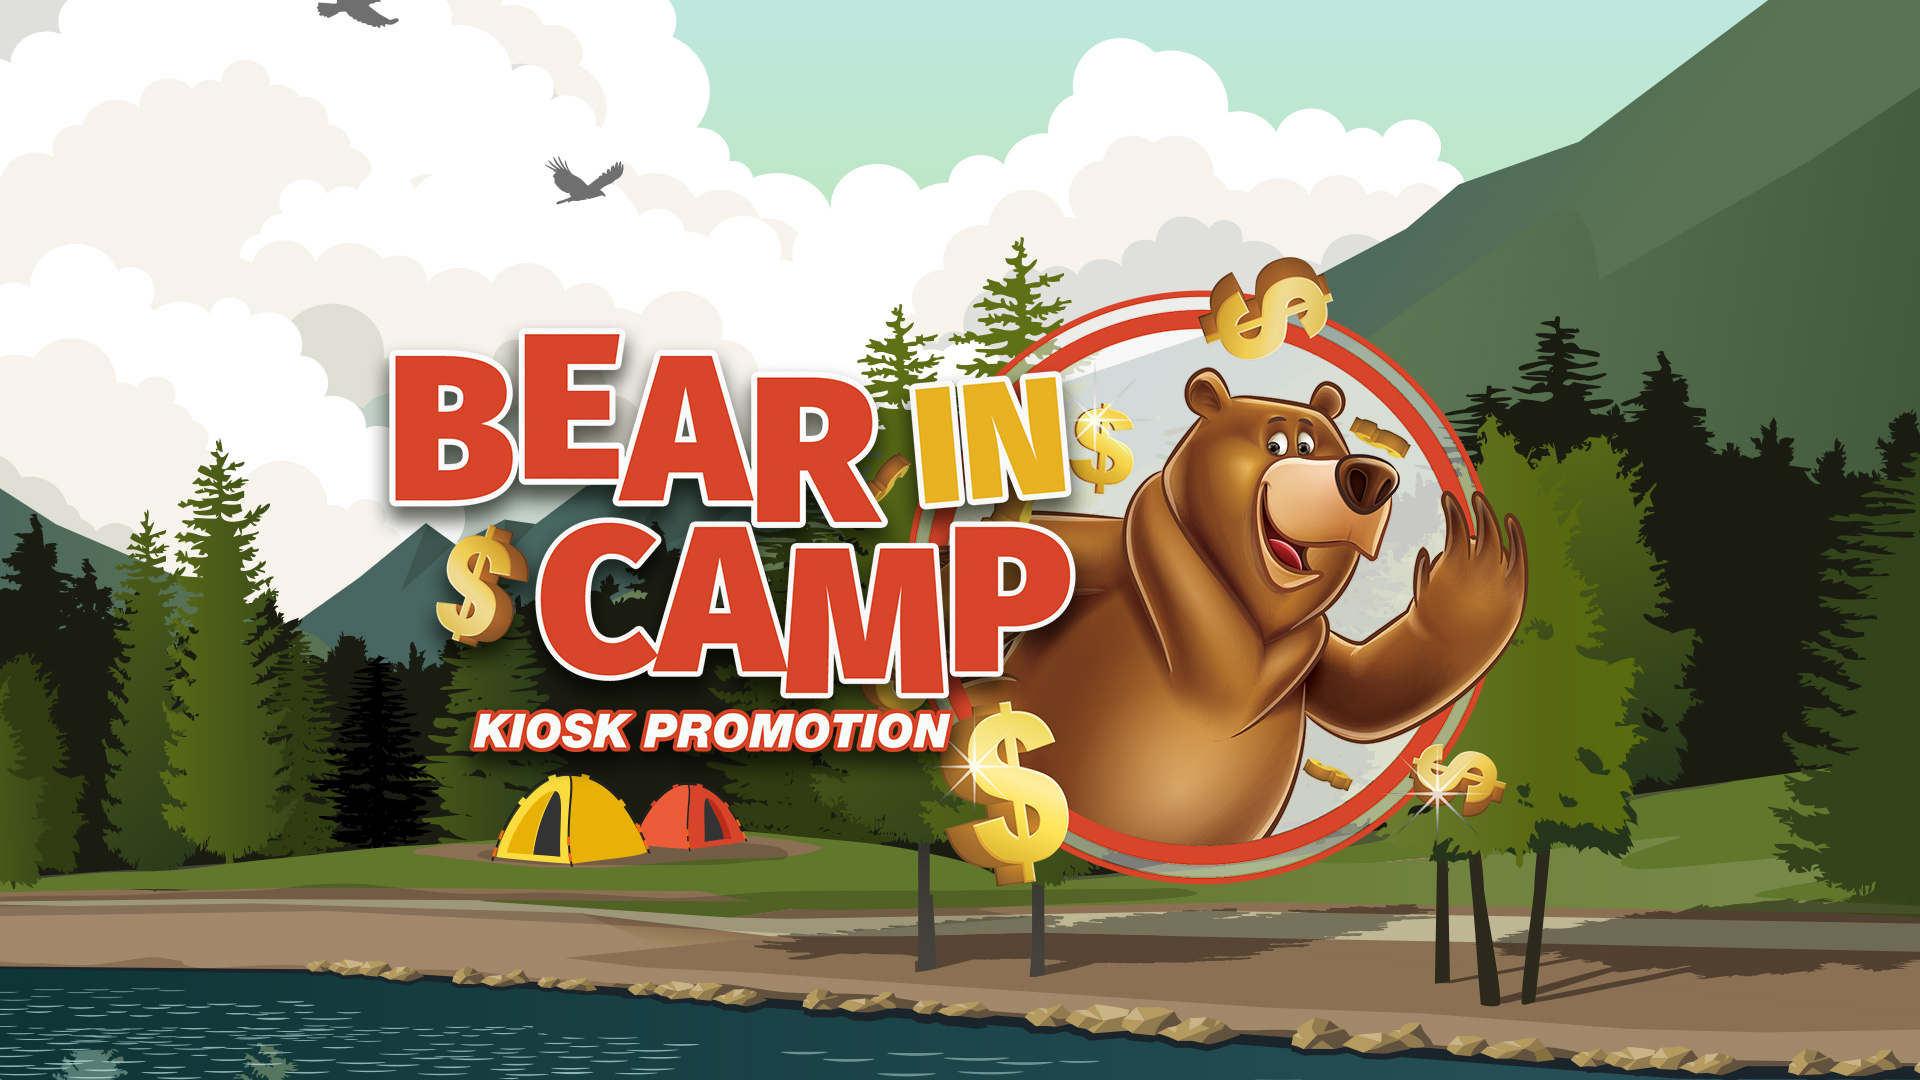 Bear In Camp - Kiosk Promotion